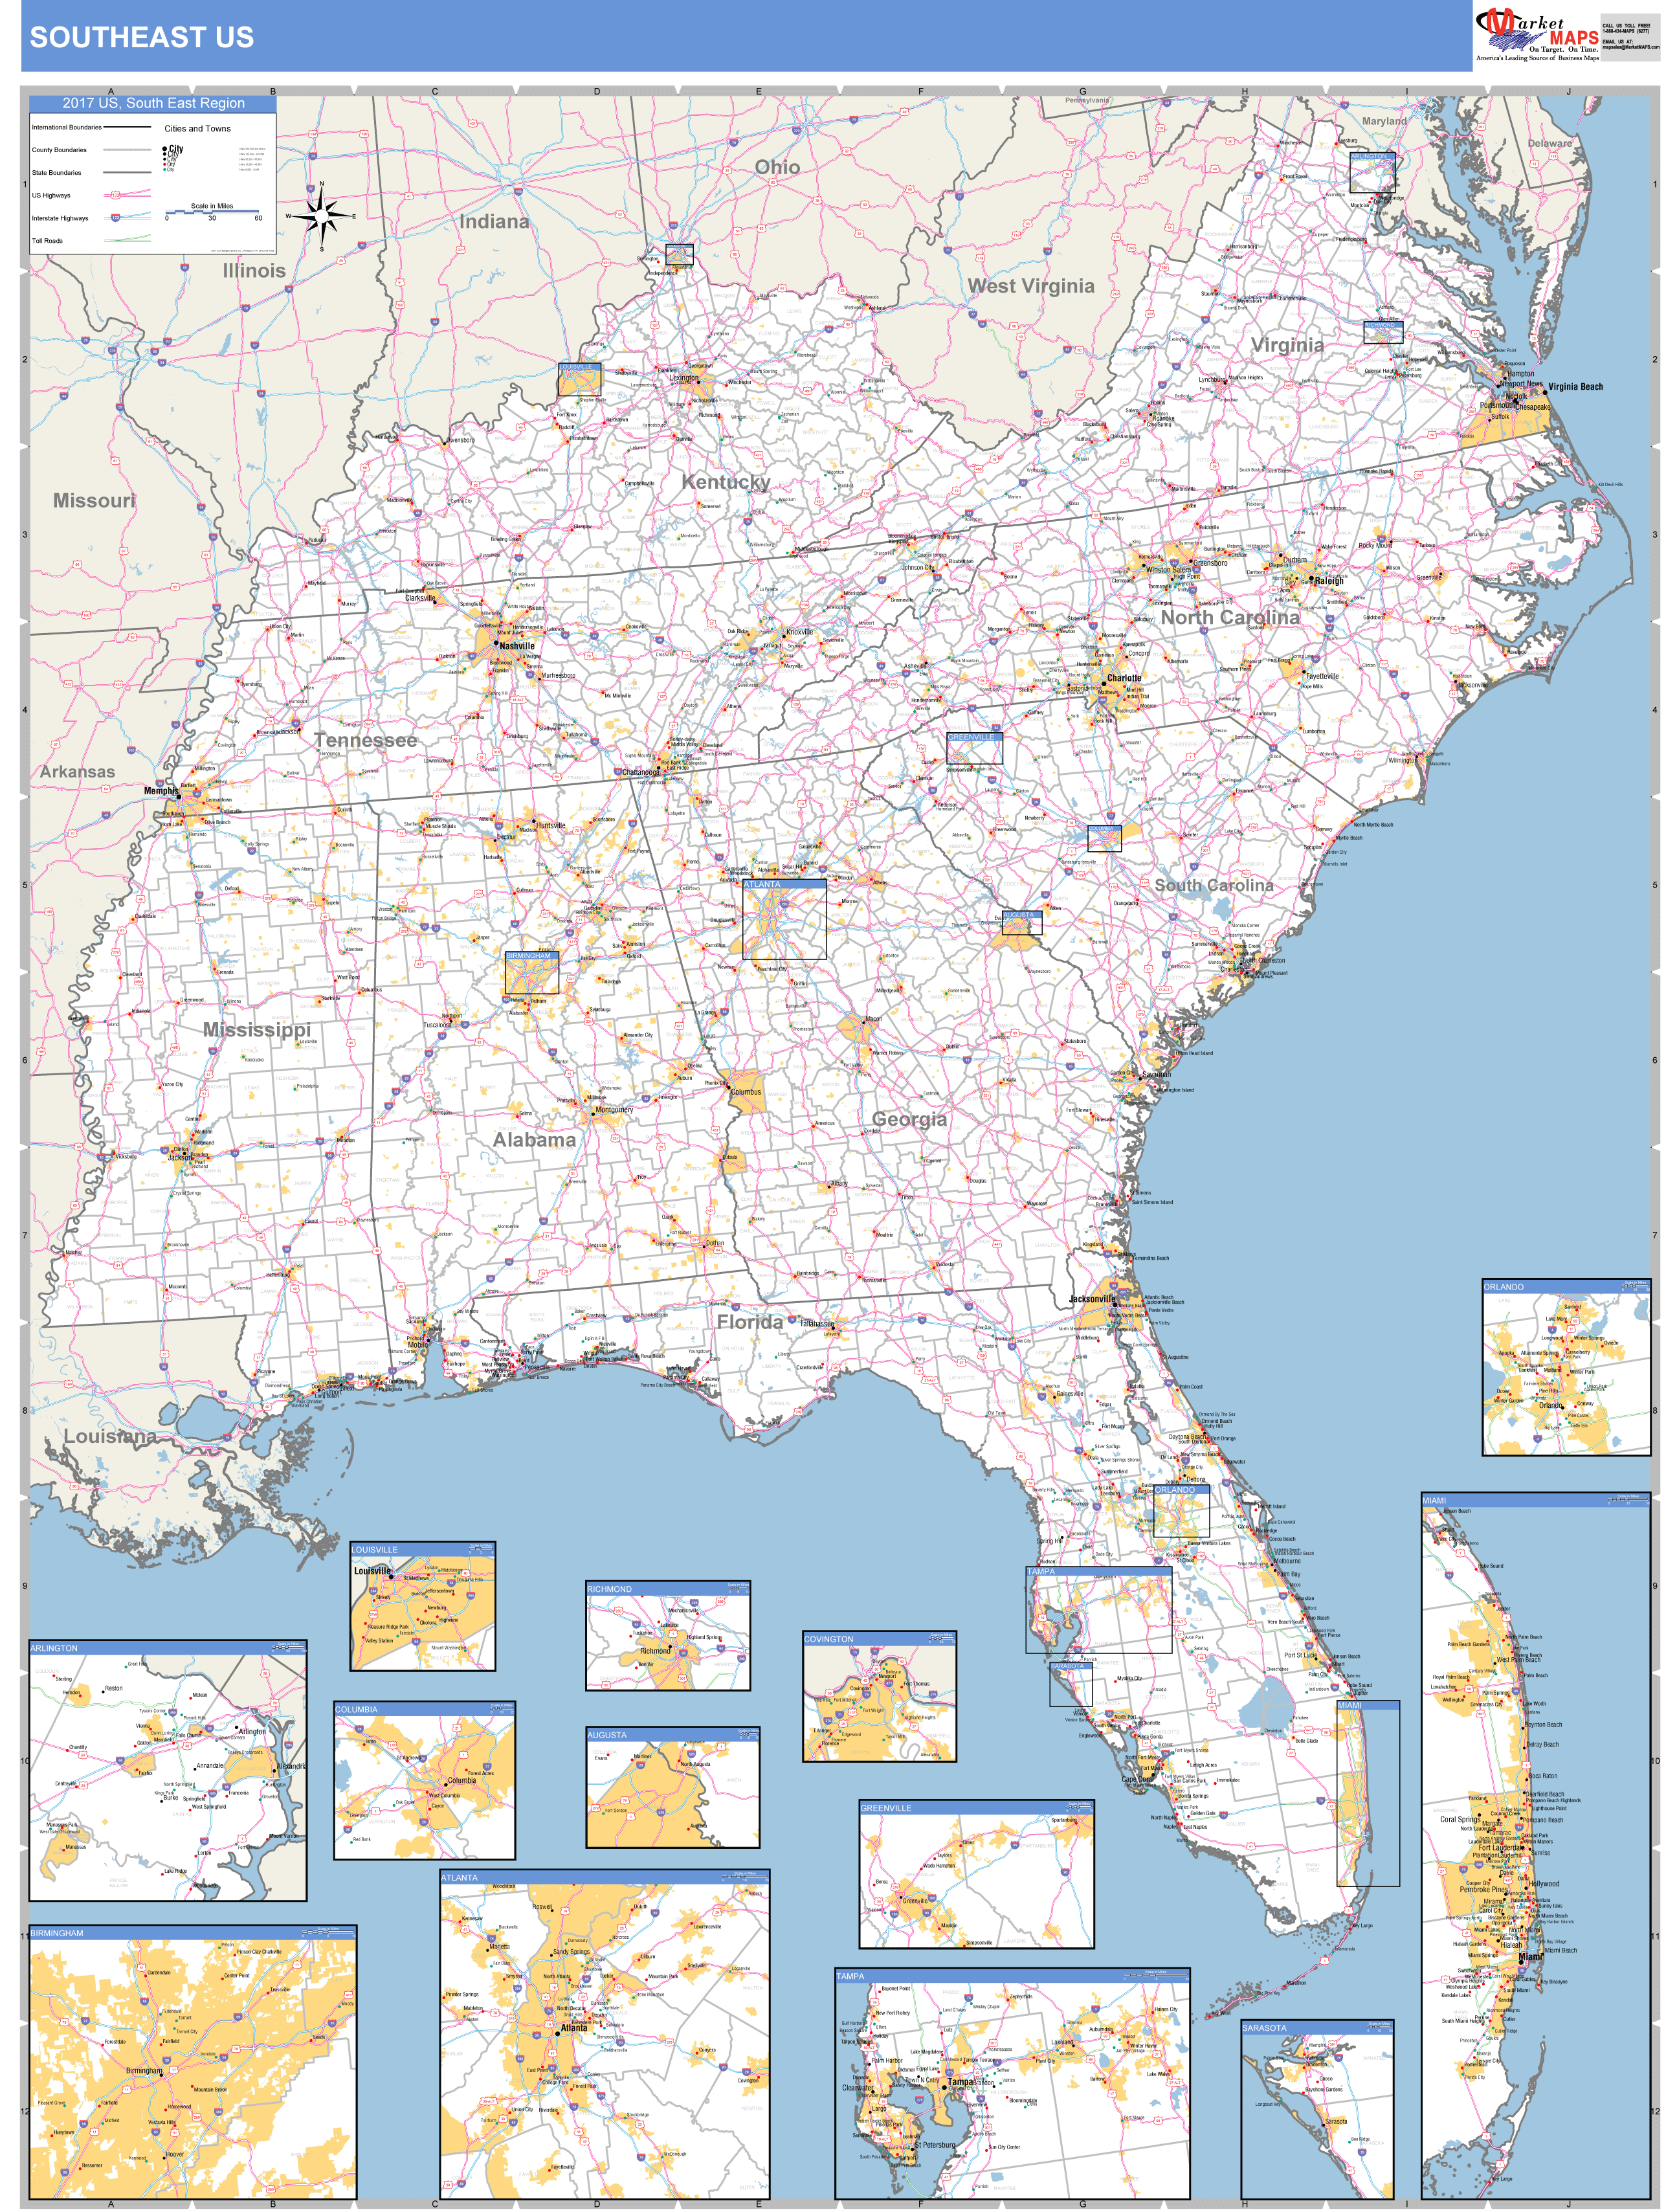 US Southeast 2 Regional Wall Map Basic Style by MarketMAPS MapSales